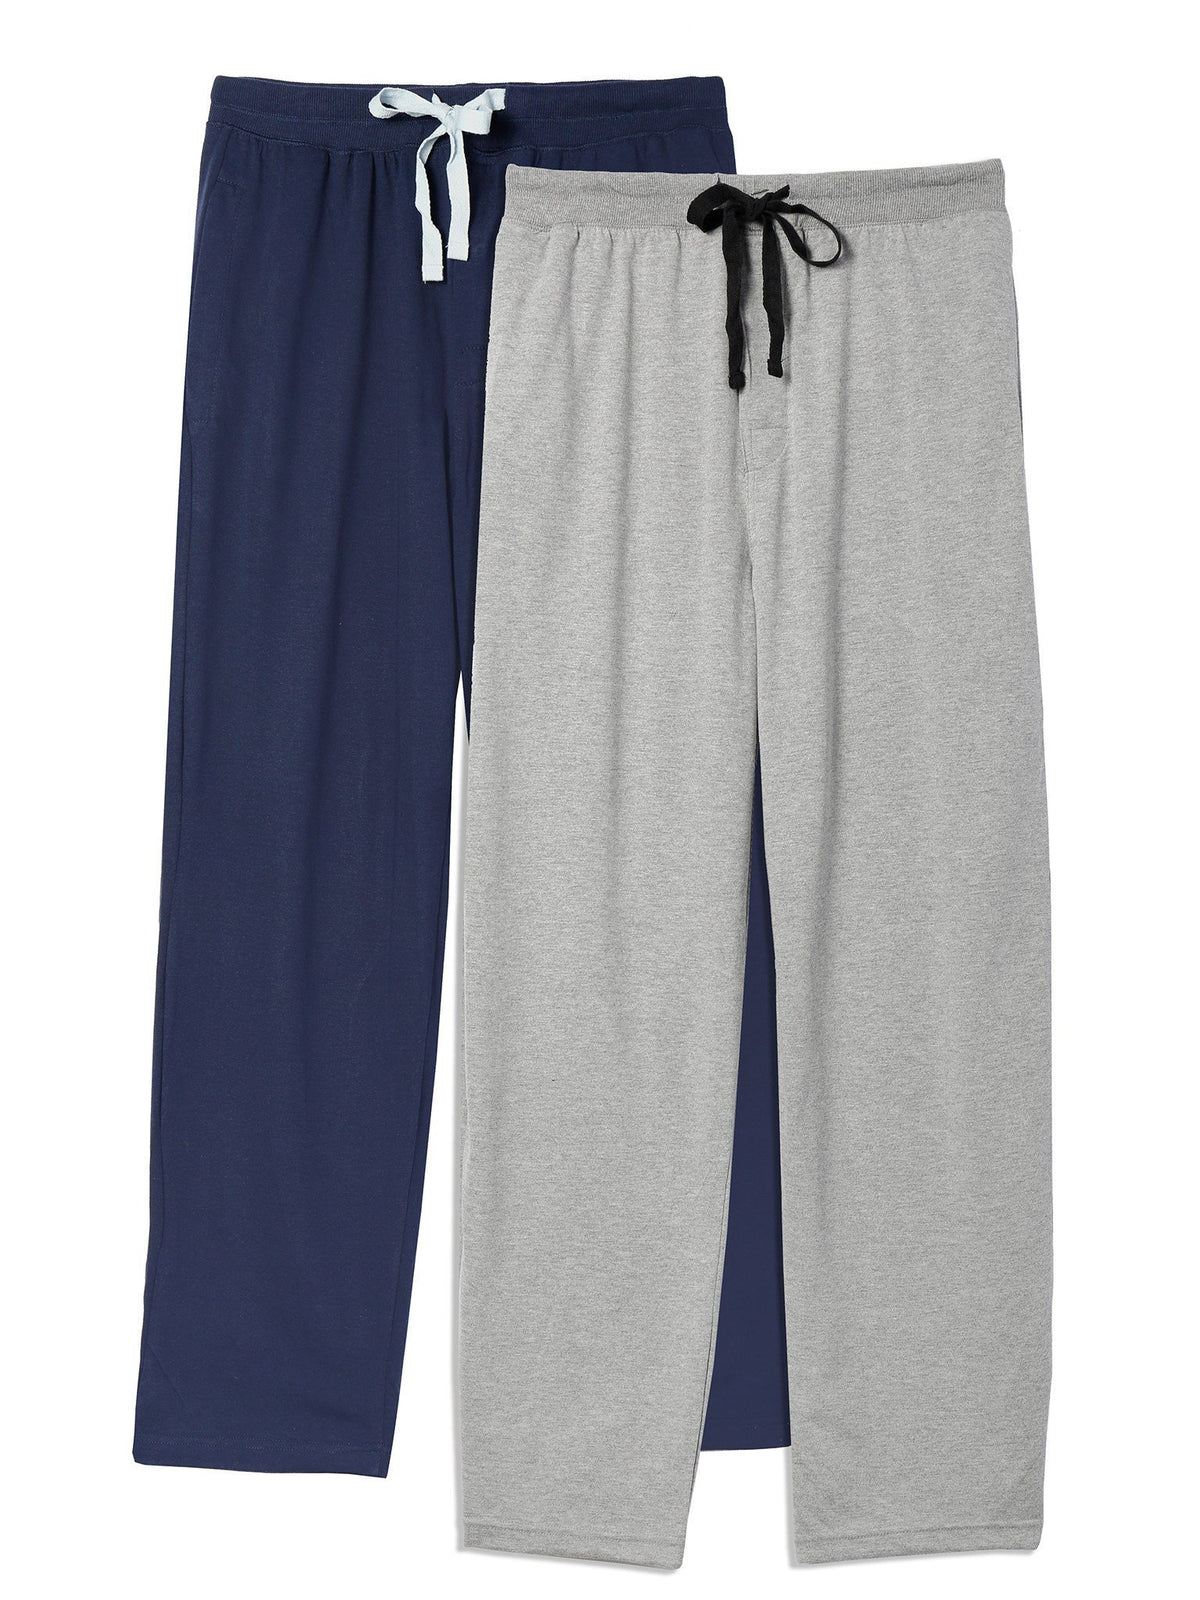 Men's 2-Pack Premium Knit Sleep/Lounge Pants - Heather Grey/Navy